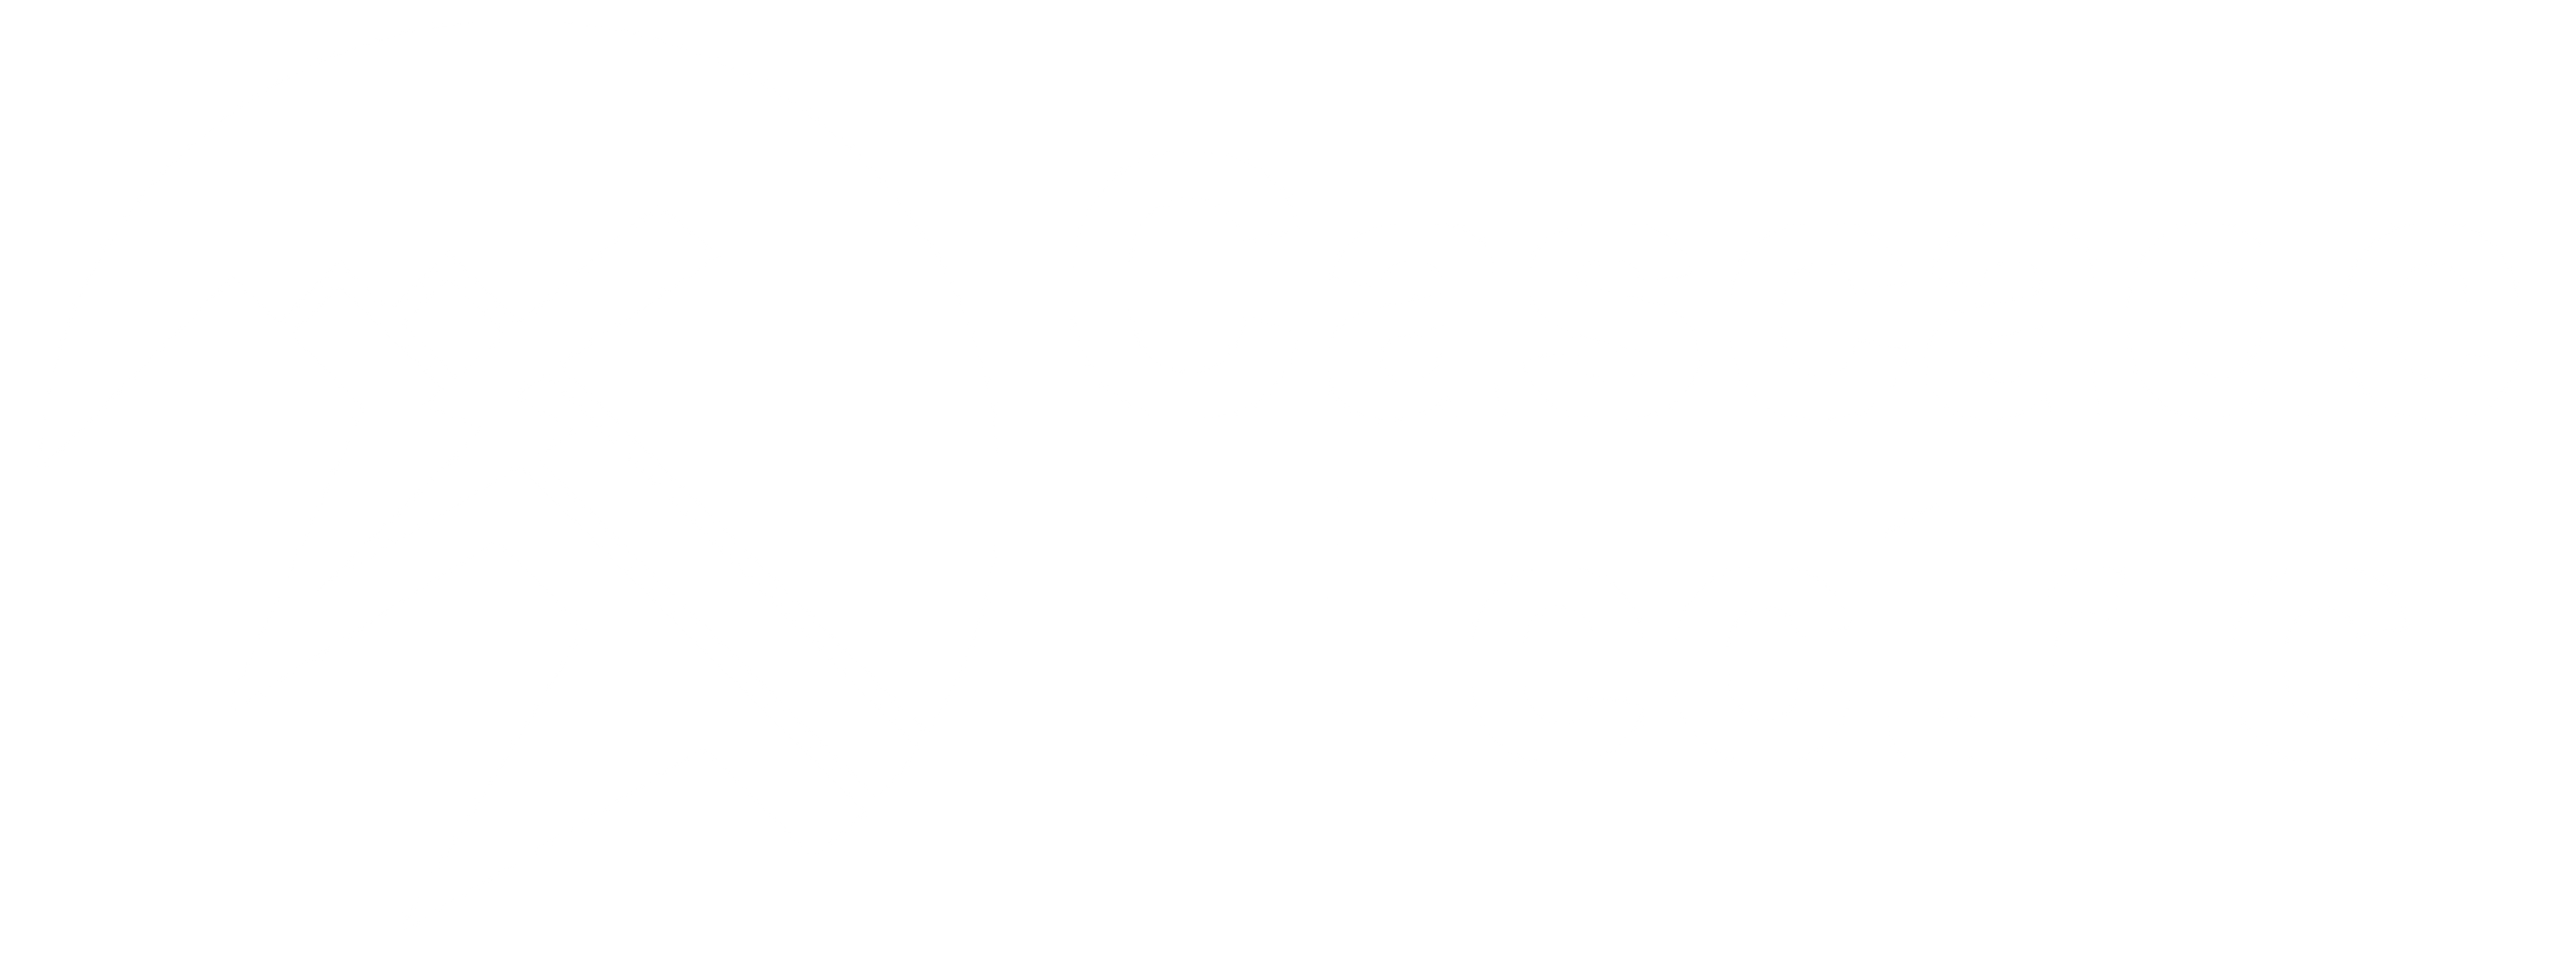 Cascade Electric logo of a lightning bolt over 3 mountains